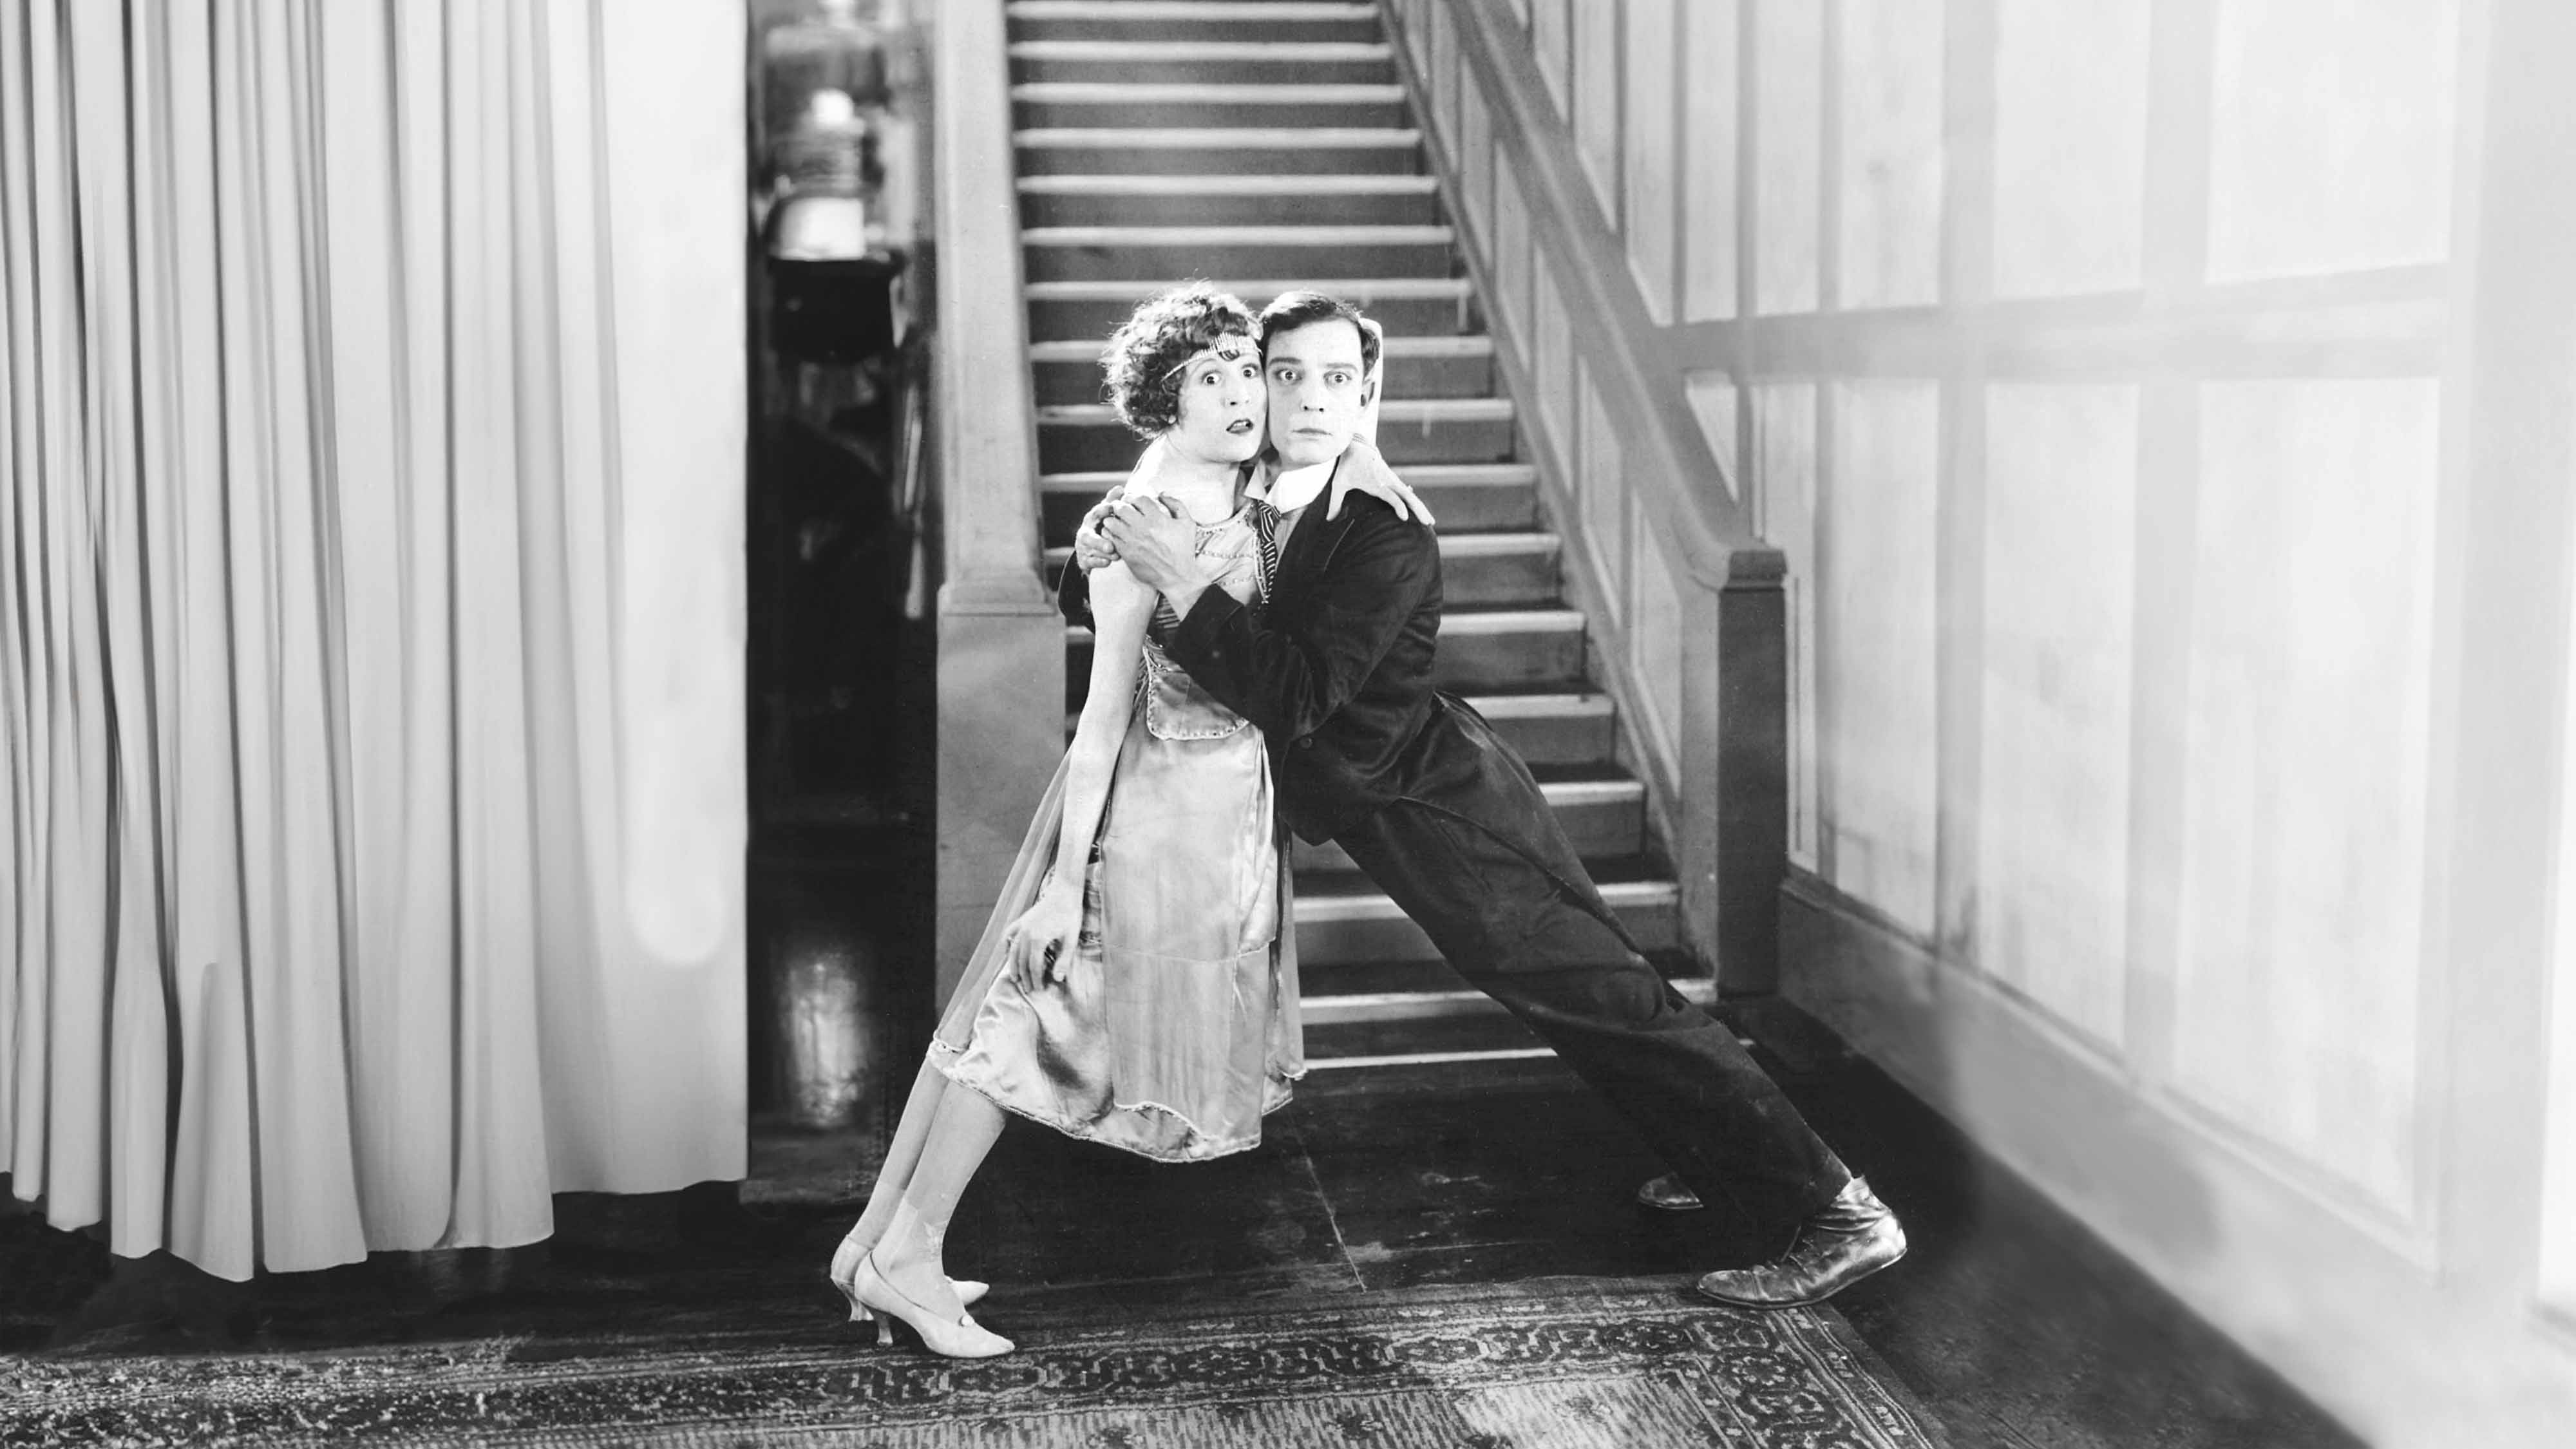 Buster Keaton and Virginia Fox